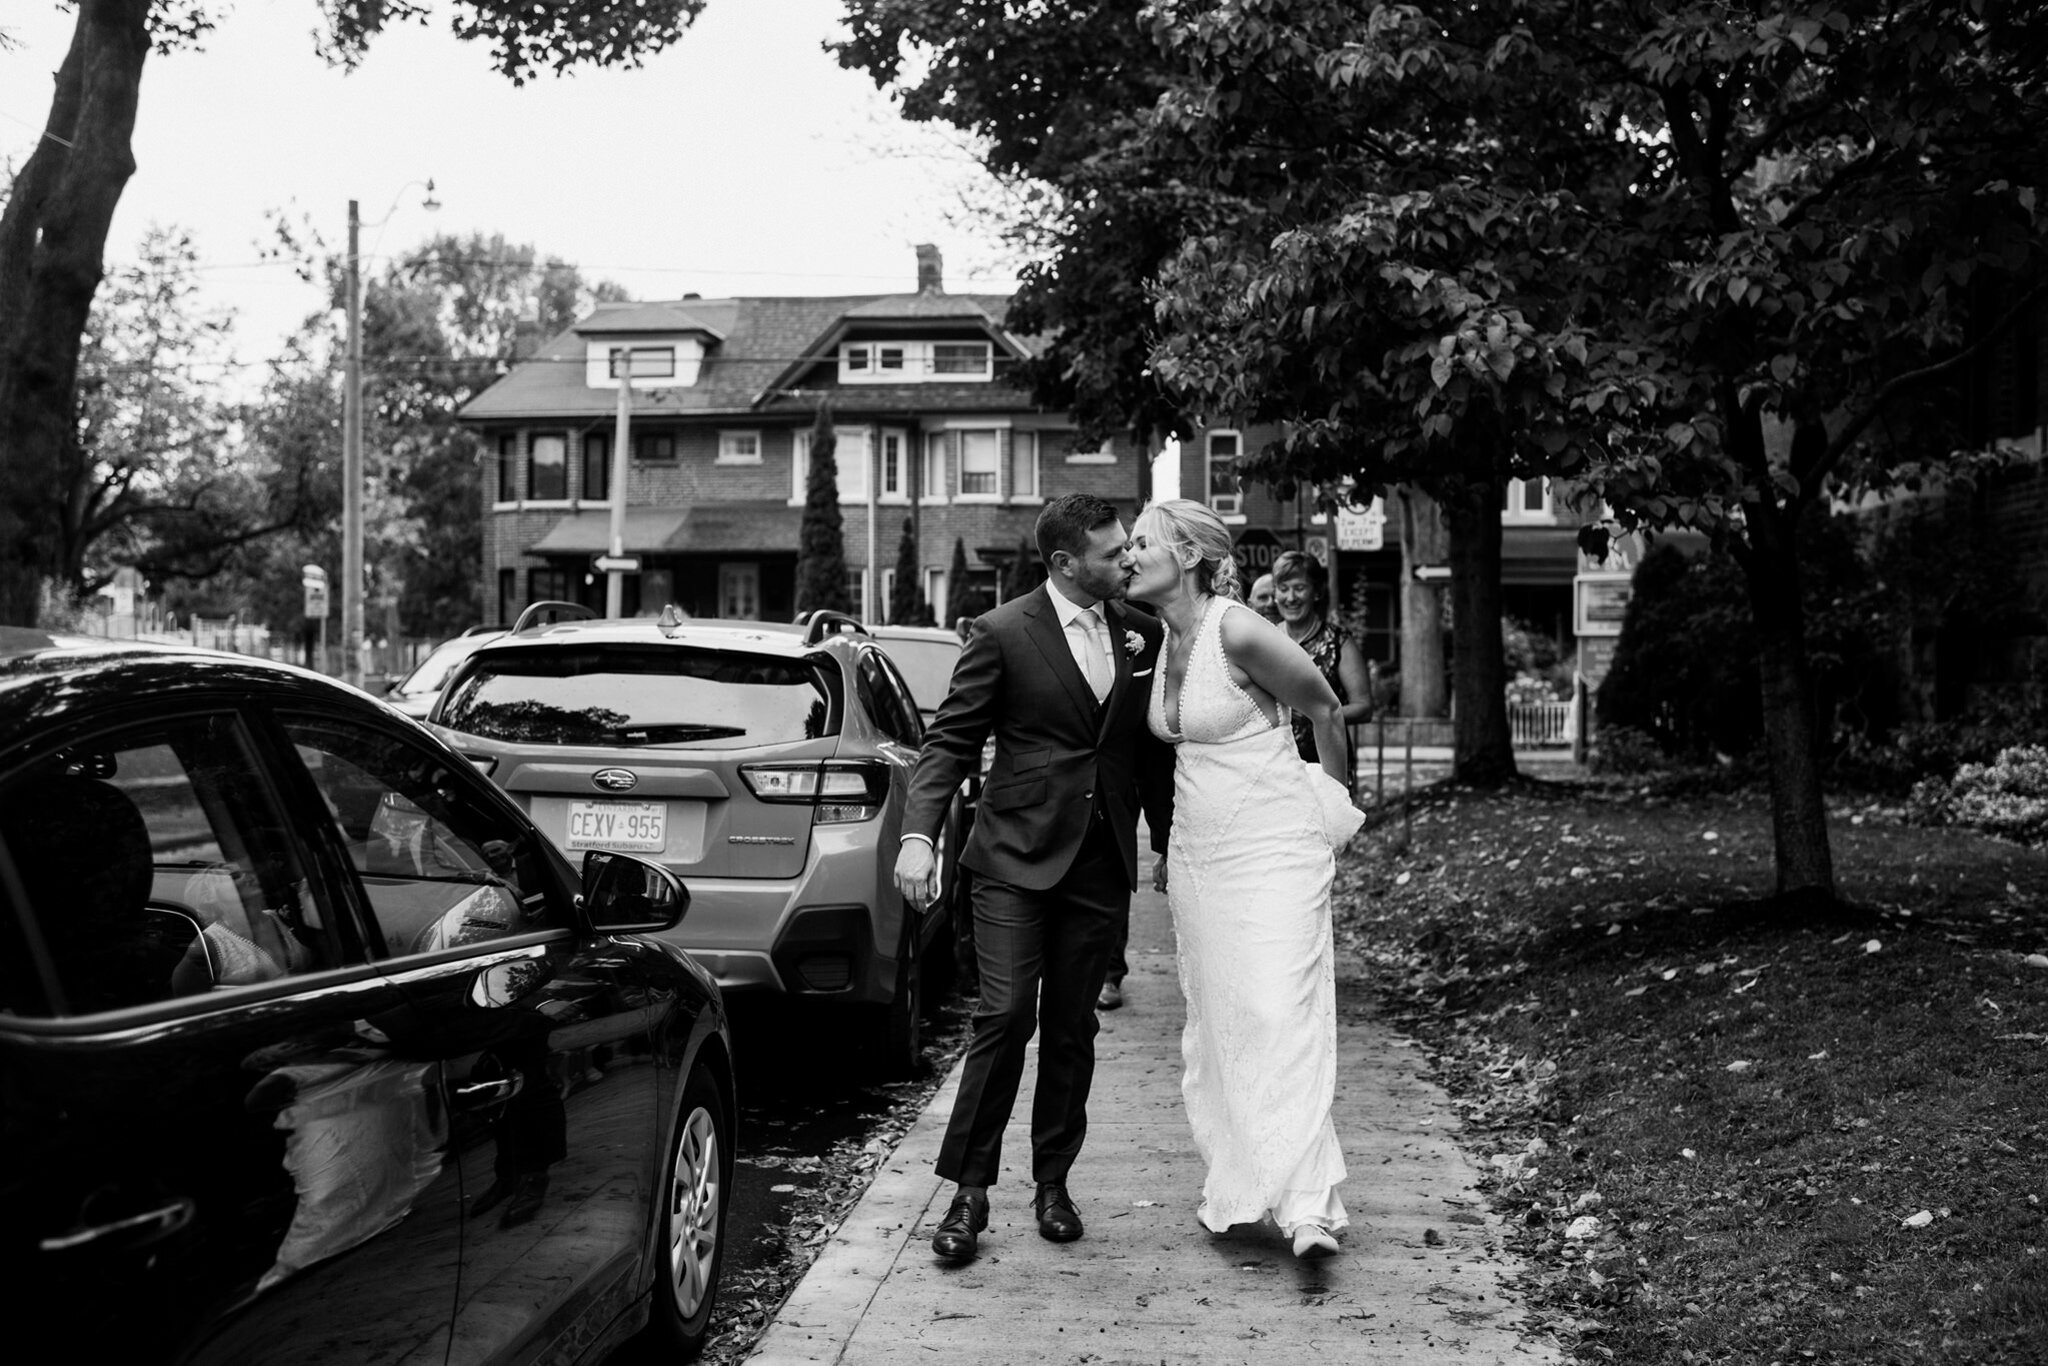 898-candid-bride-groom-photos-toronto-street-weddings-brewery-restaurant-emotional.jpg